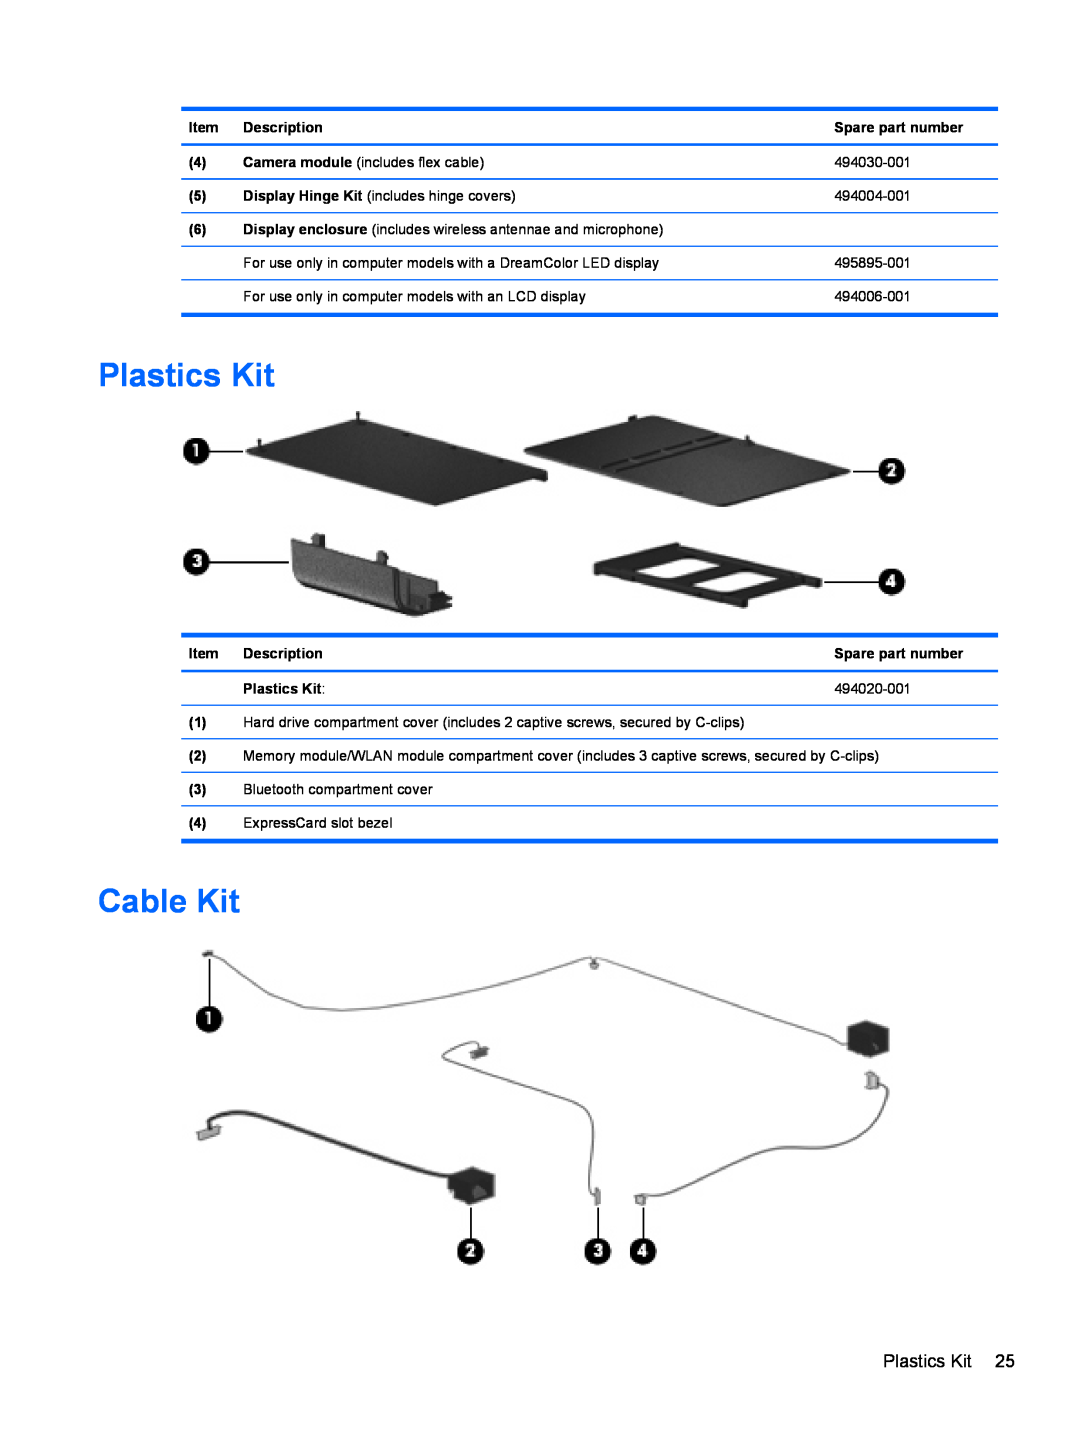 HP FN037UAABA, FN038UAABA manual Plastics Kit, Cable Kit 